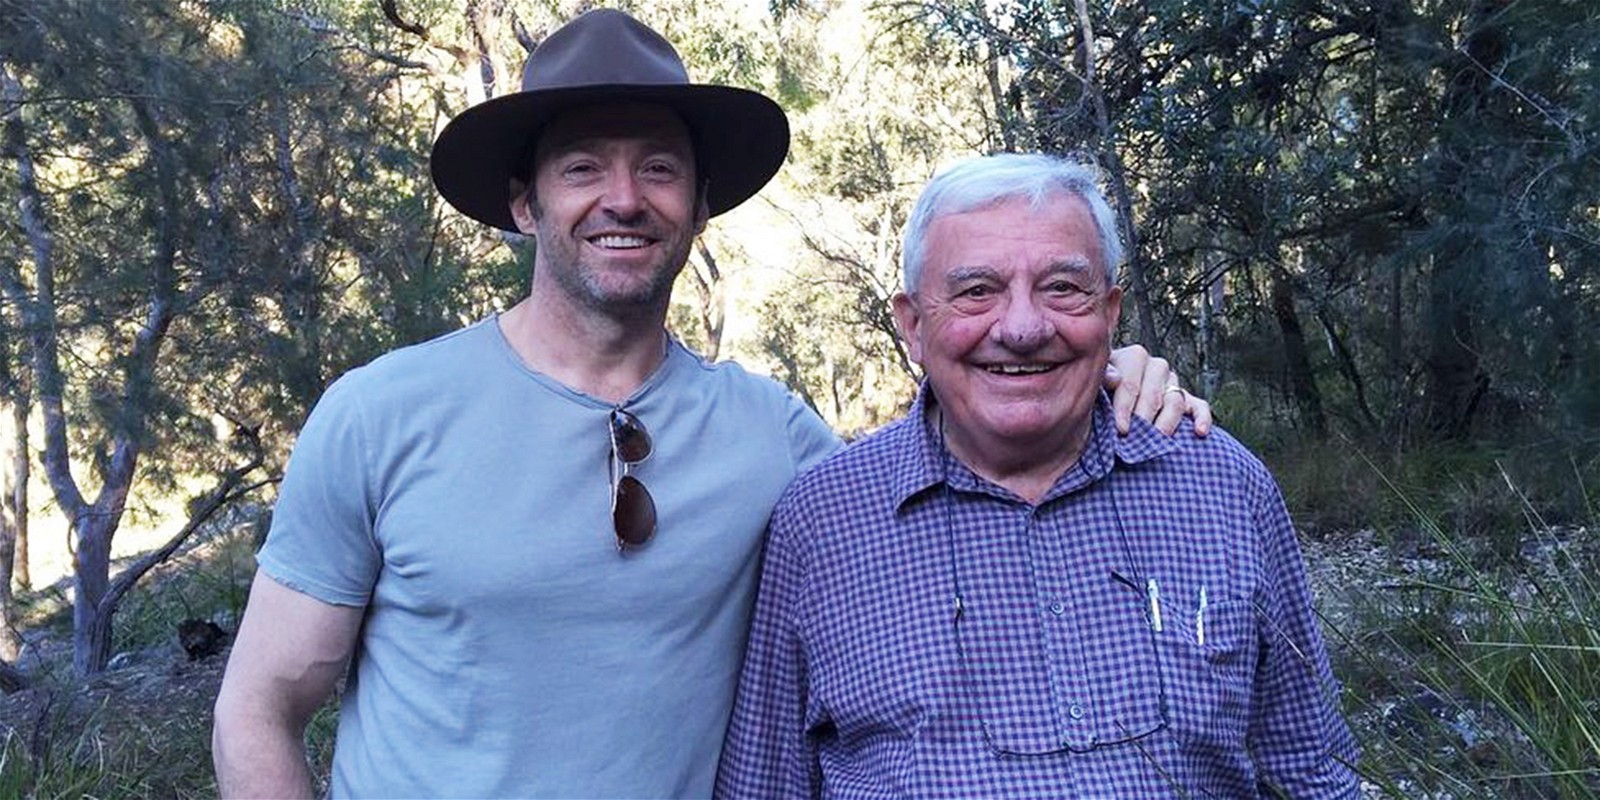 Hugh Jackman with his father Christopher Jackman